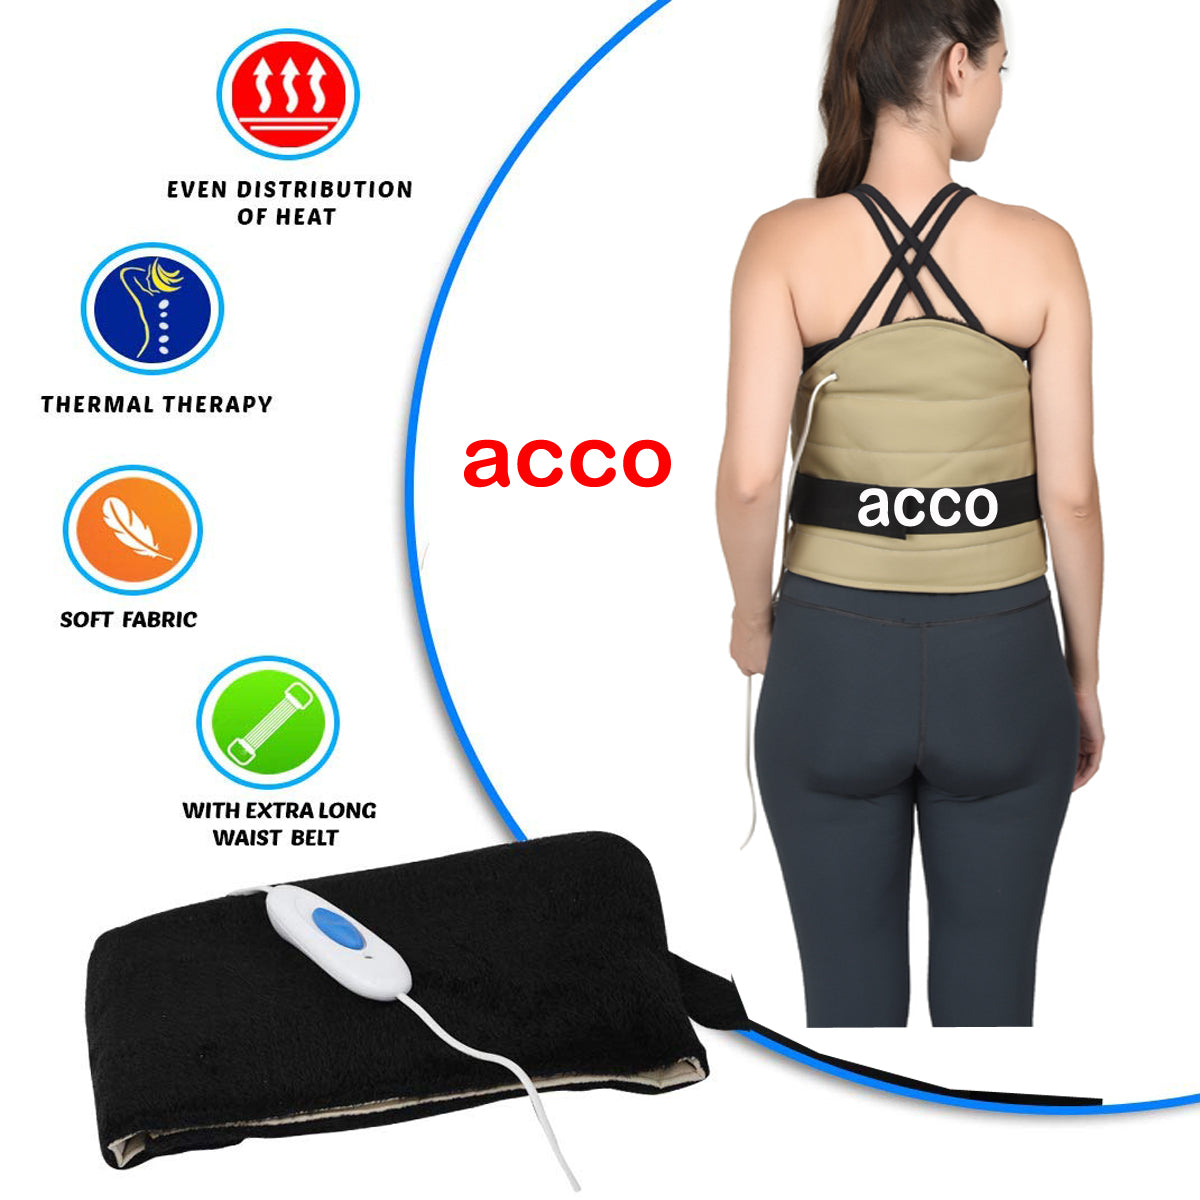 acco Orthopedic Electric heating Belt for Back Pain- Medical